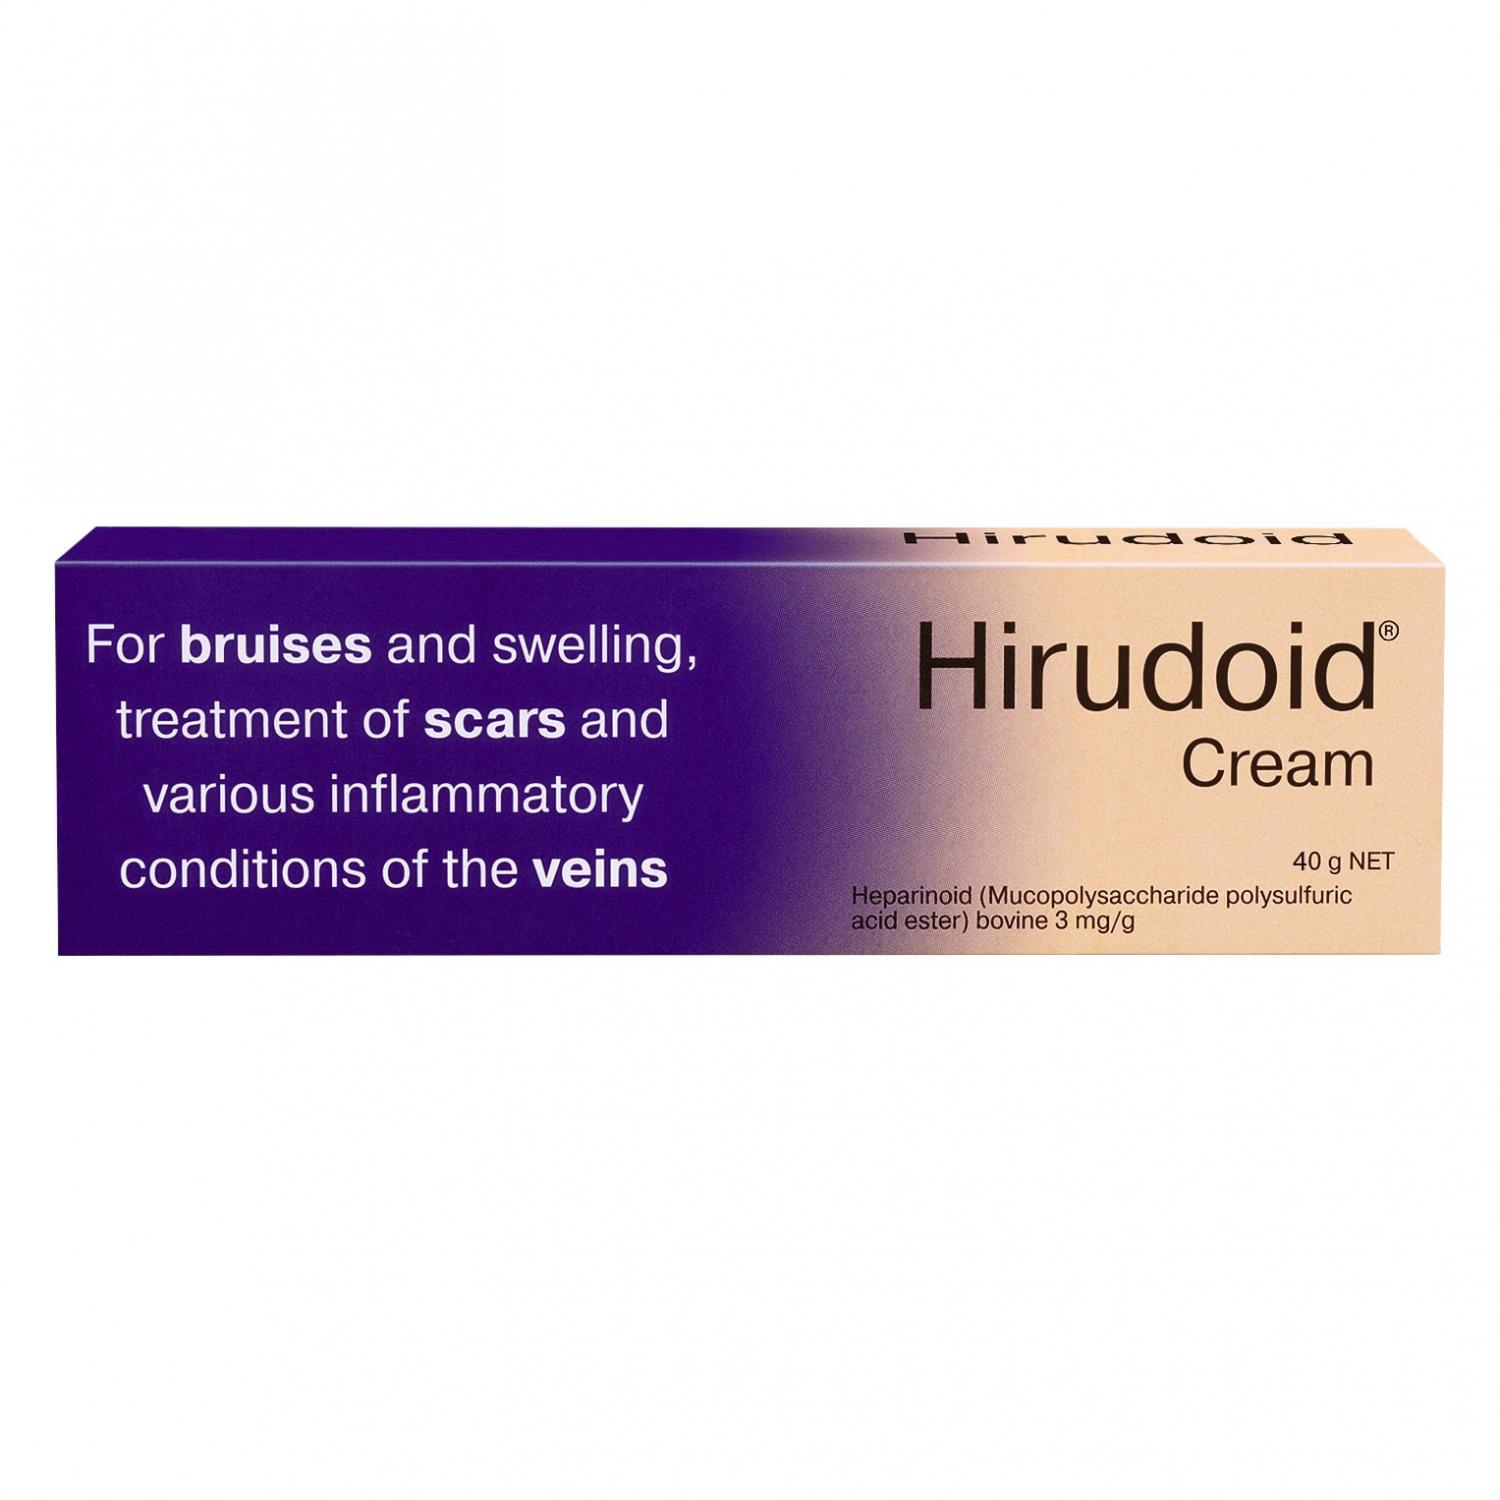 Thumbnail for Hirudoid Cream 40g